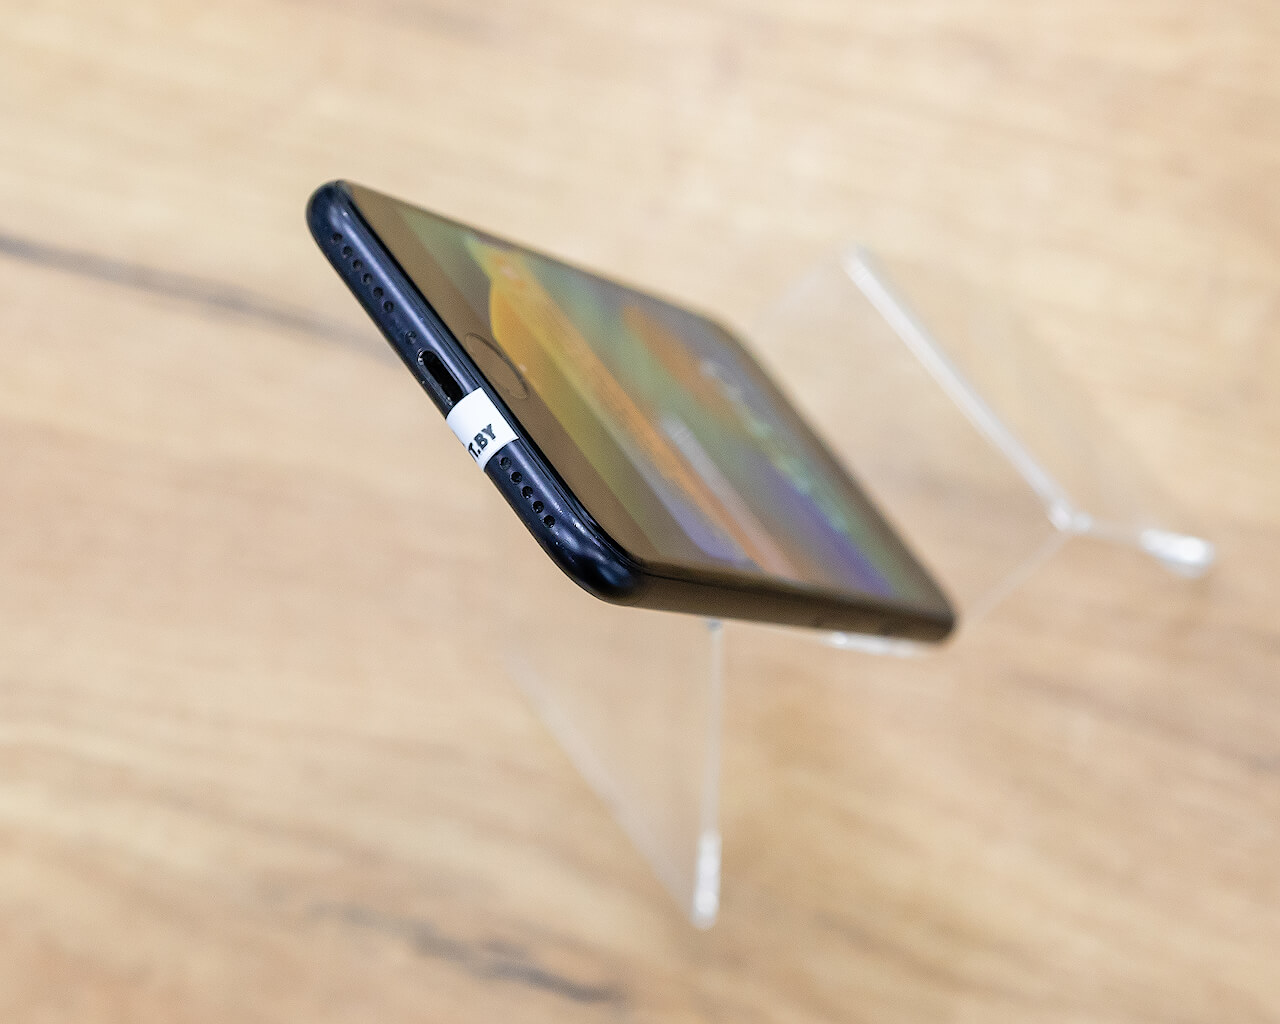 Смартфон Apple iPhone SE 2020 128GB (чёрный)